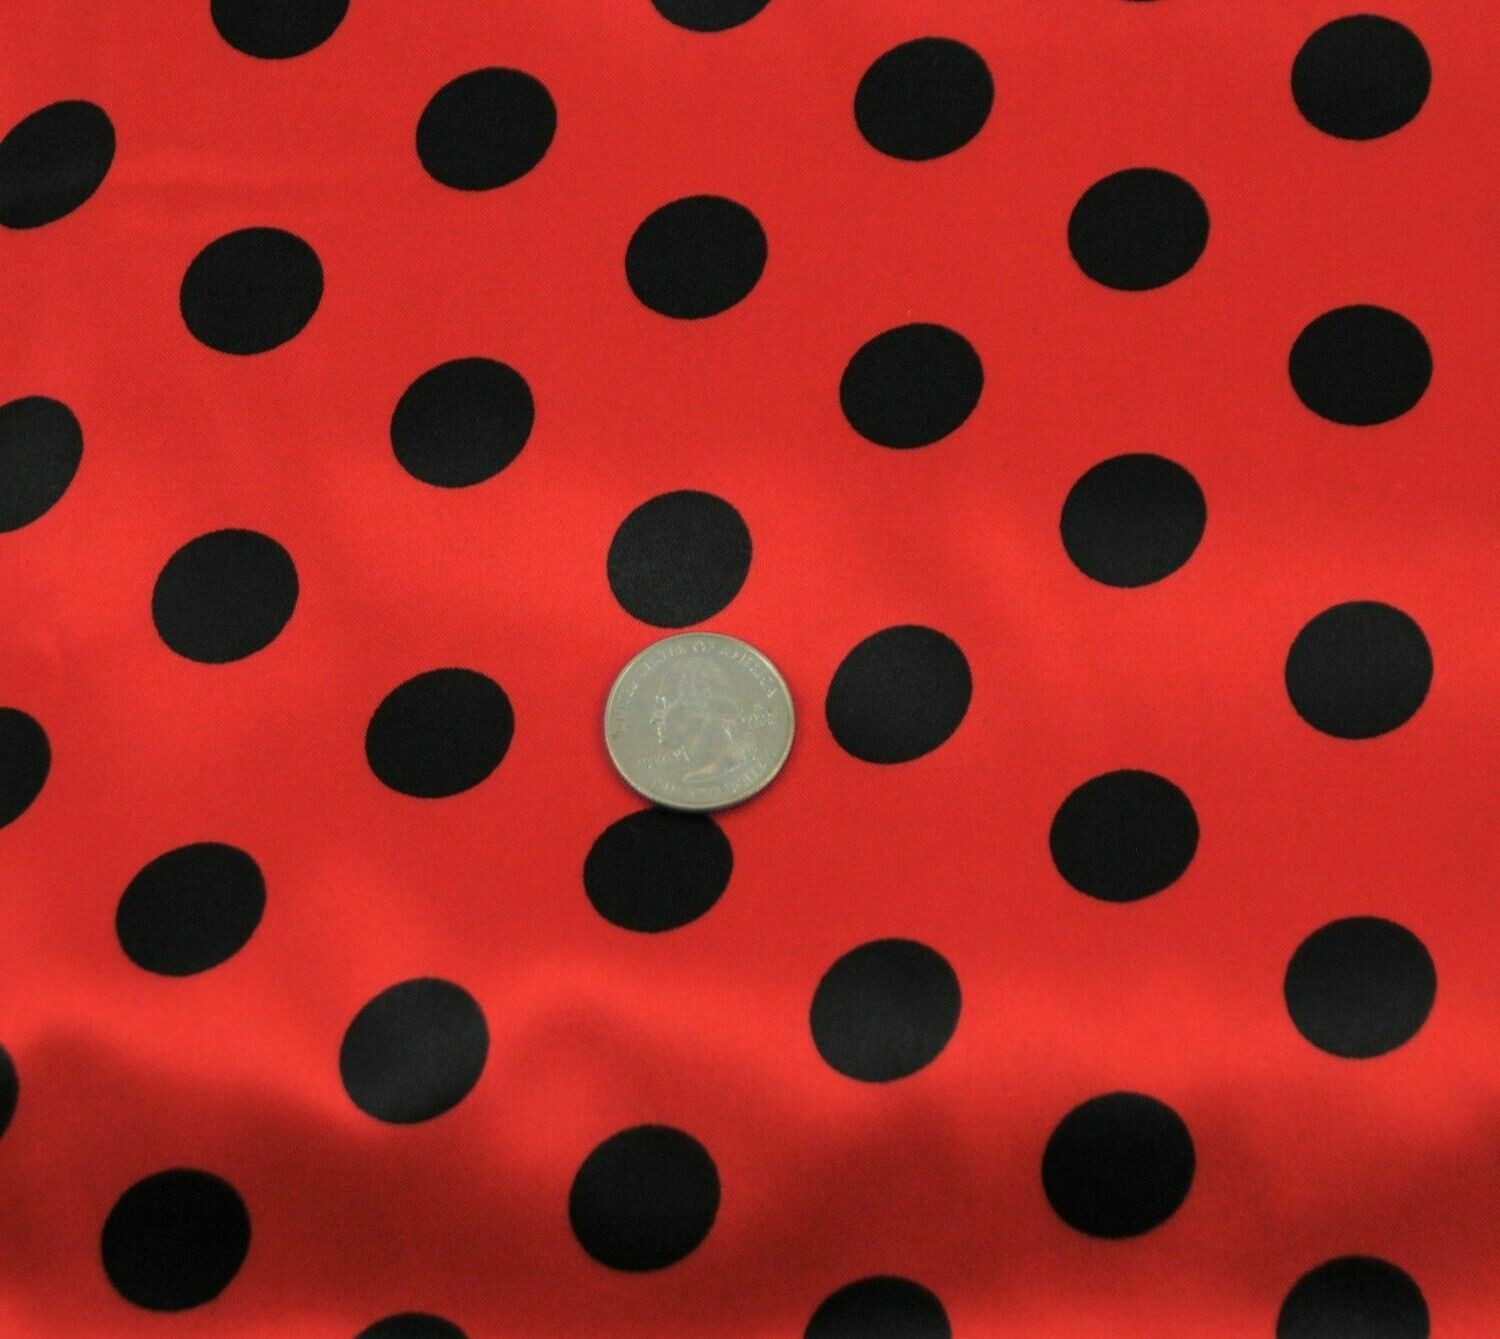 Polka Dot red w black SHINY SATIN 100%Polyester Pantie Lingerie Fabric 60